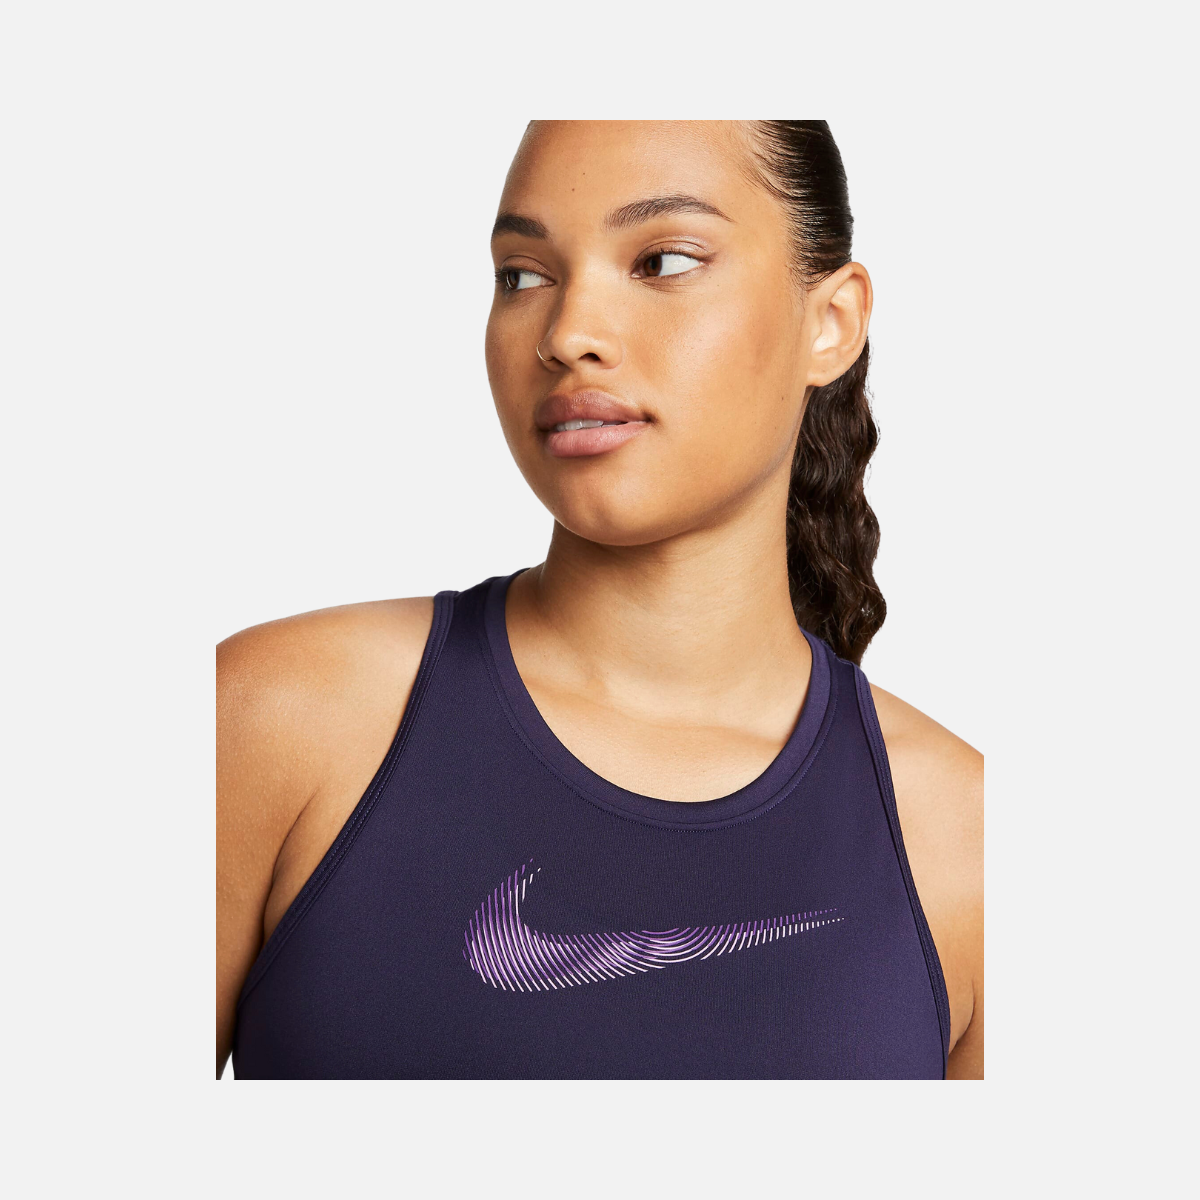 Nike Dri-FIT Swoosh Women's Running Tank Top -Purple Ink